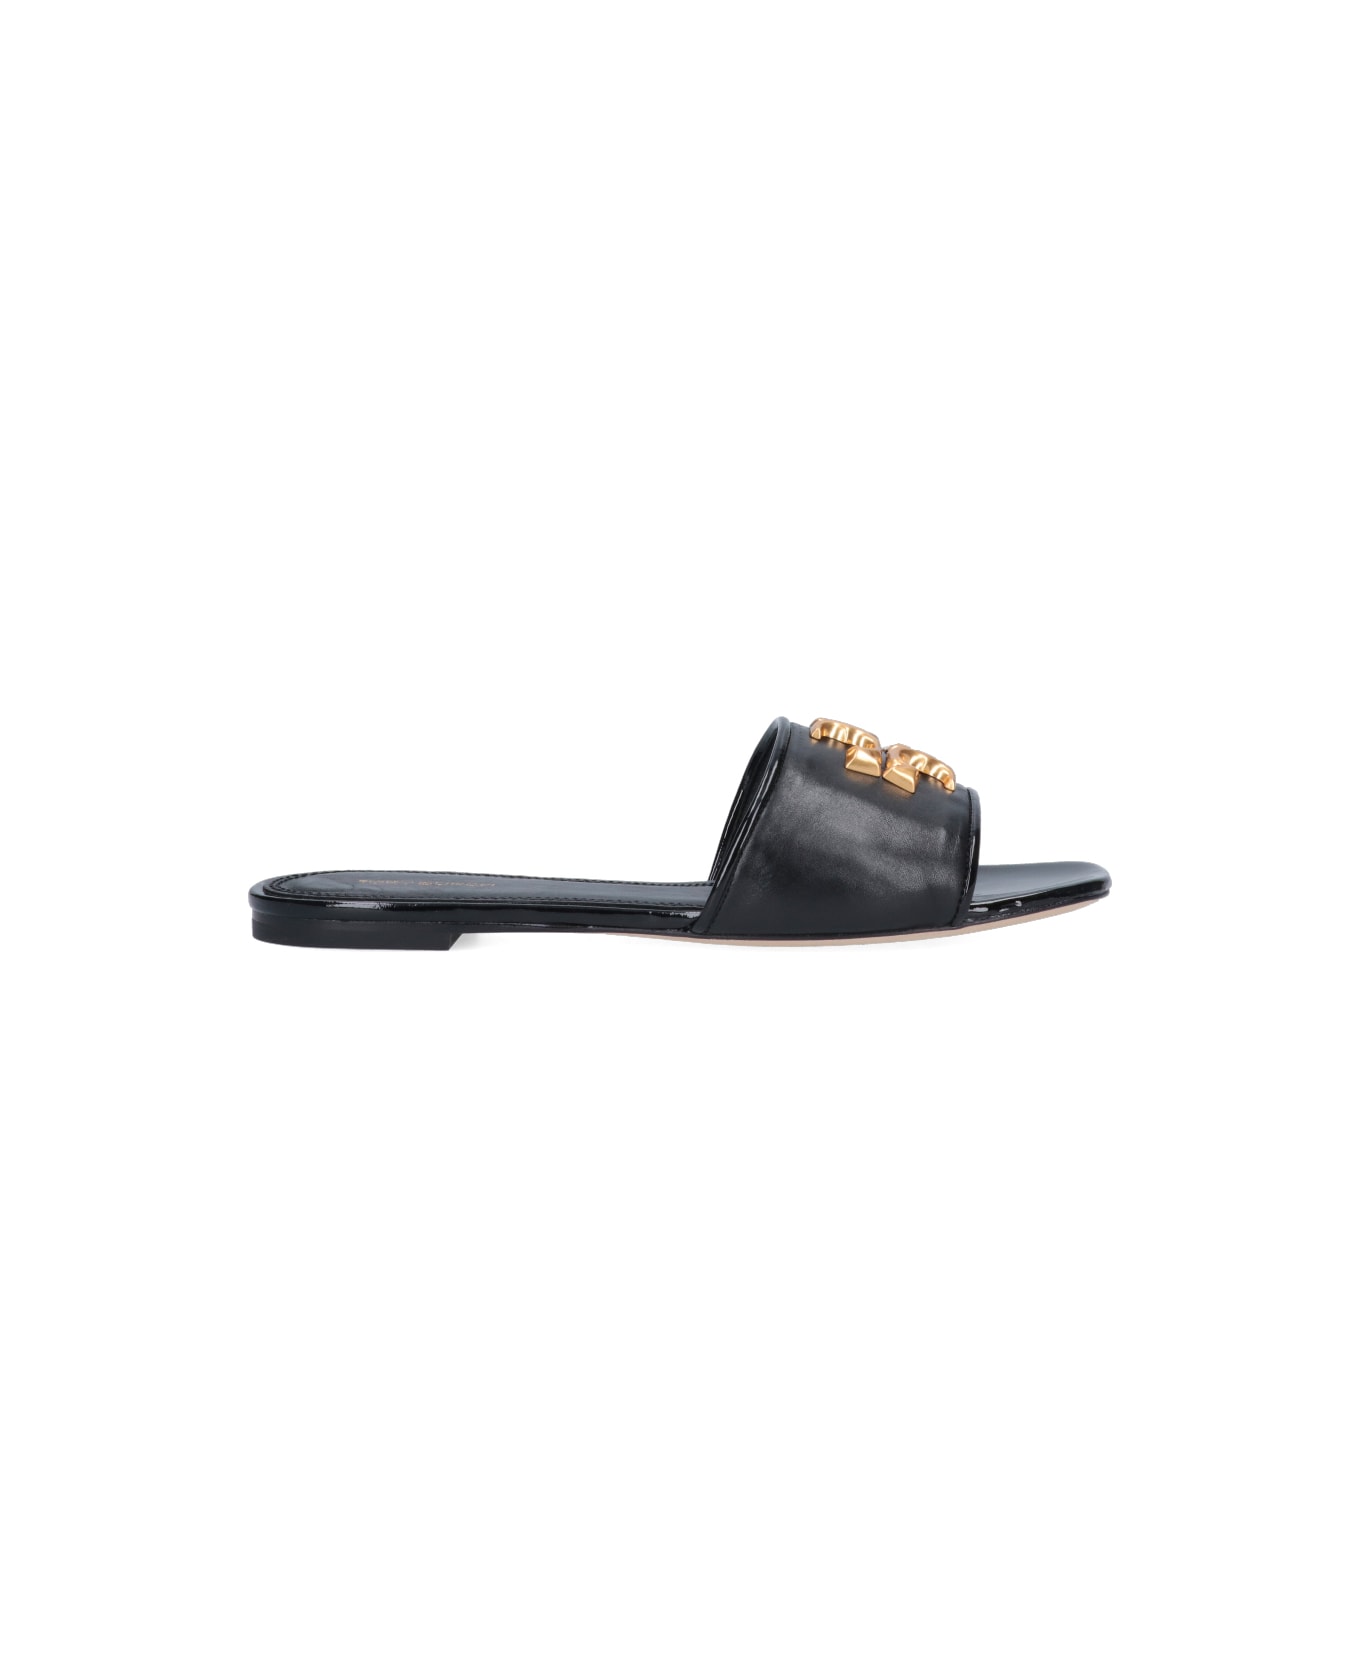 Tory Burch 'eleanor' Slider Sandals - Black  